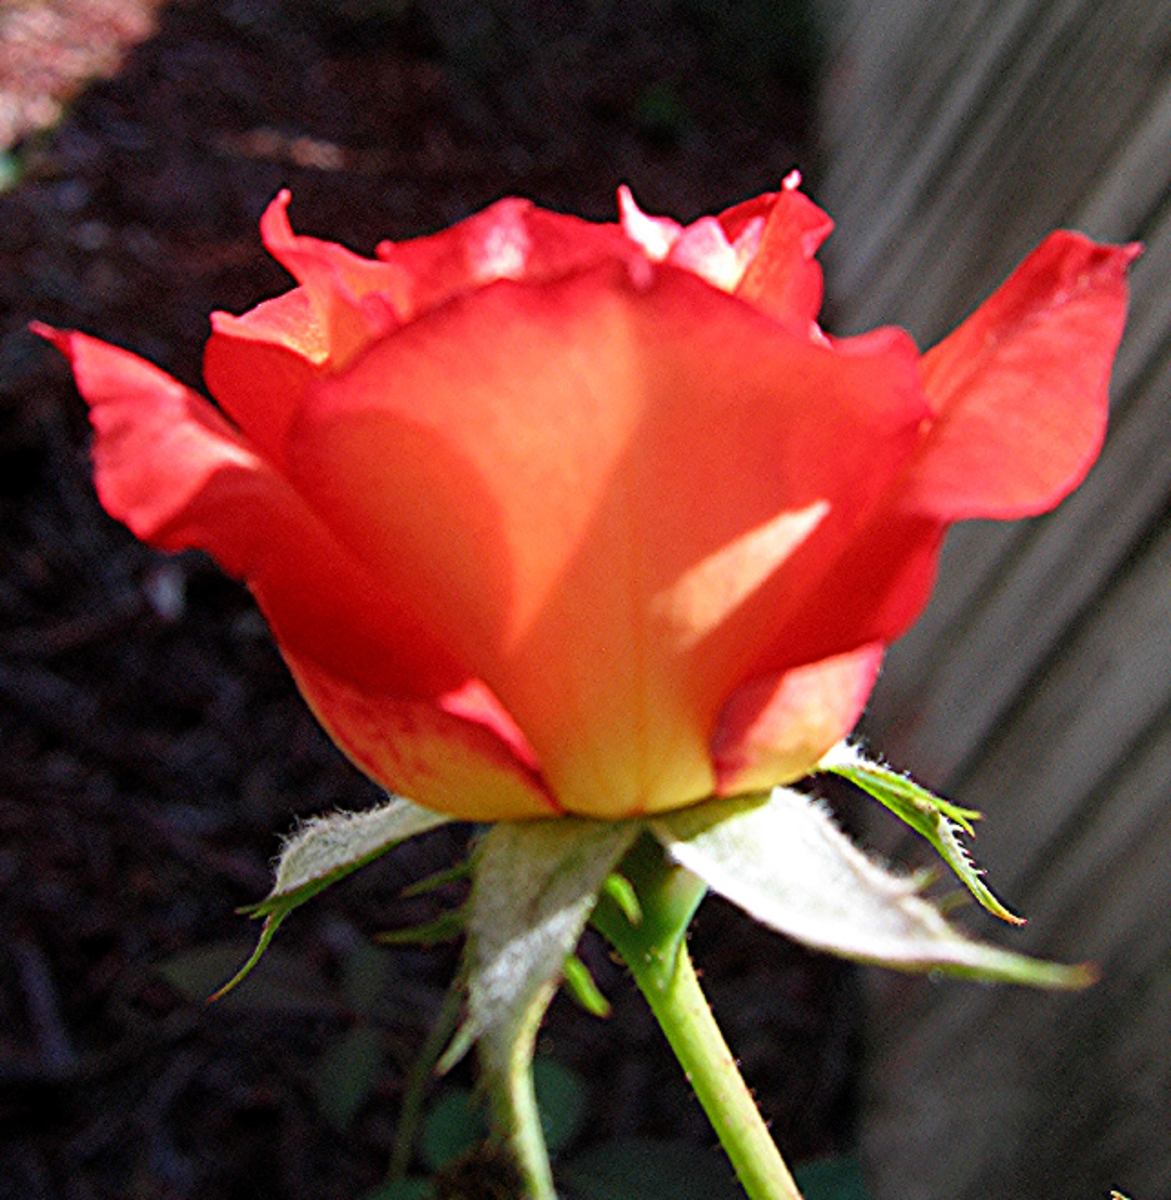 A single orange rose.